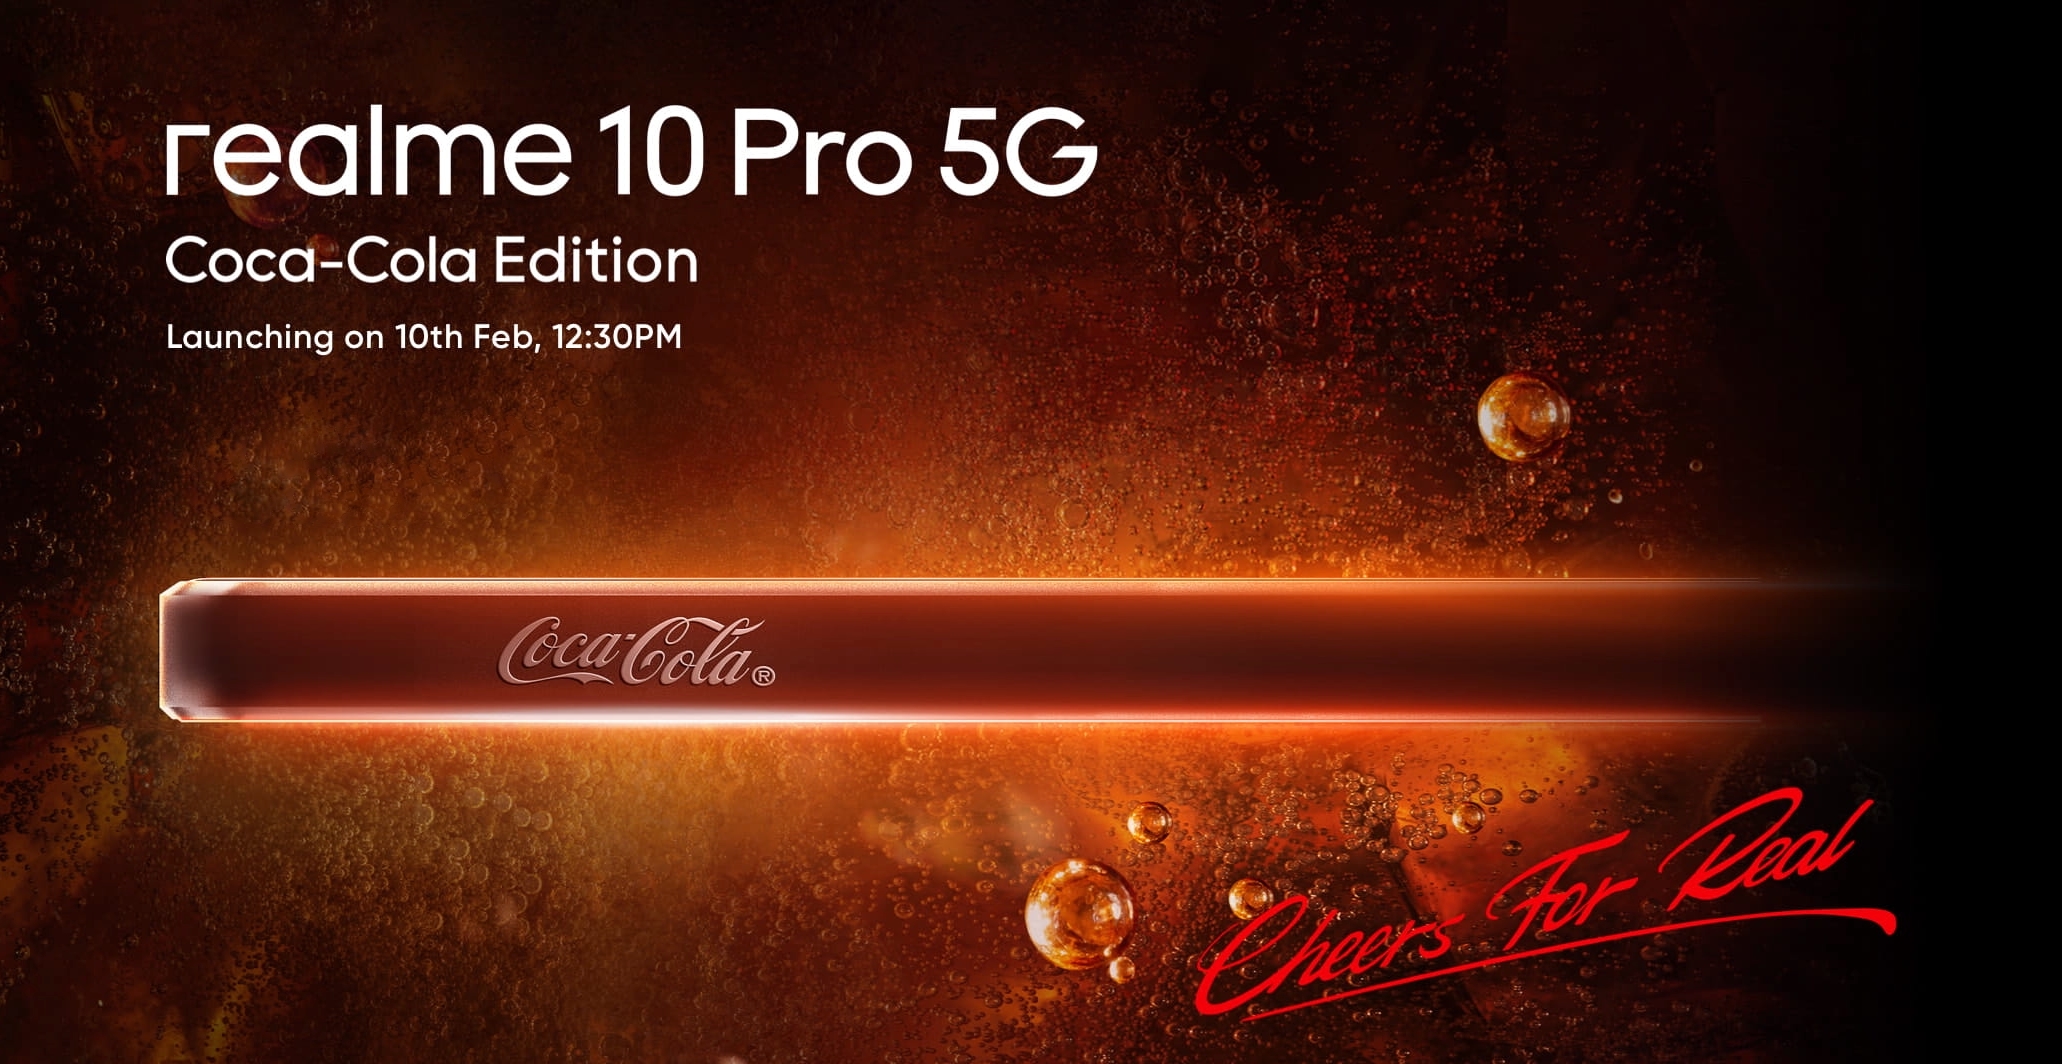 It's official: realme will unveil the realme 10 Pro 5G Coca-Cola Edition smartphone on 10 February